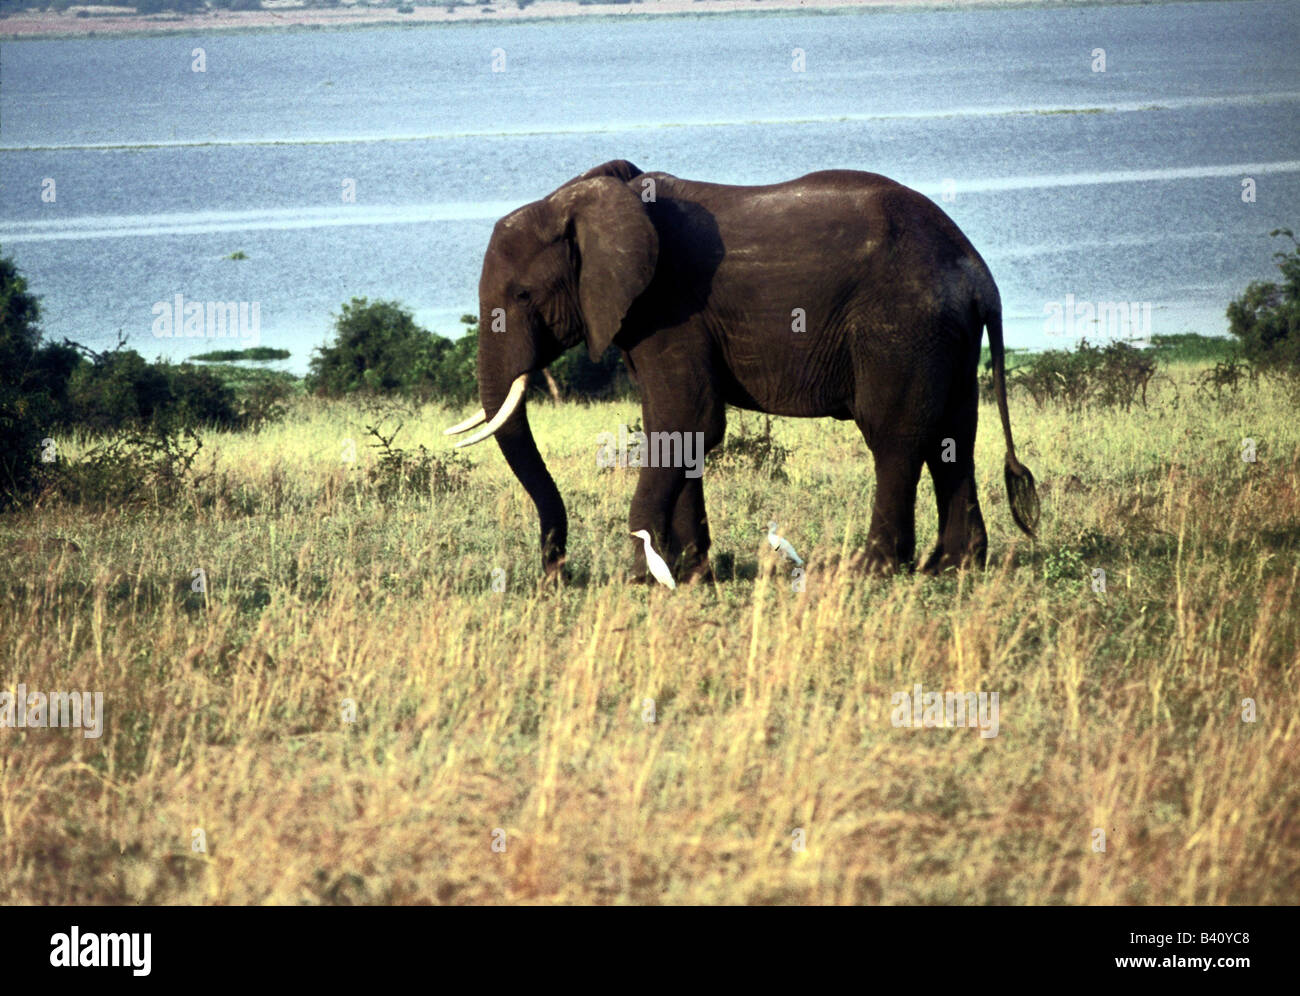 Zoologia / animali, mammifero / di mammifero, Elephantidae, Bush africano Elefante africano (Loxodonta africana), Bull l'elefante nella savana, dist Foto Stock